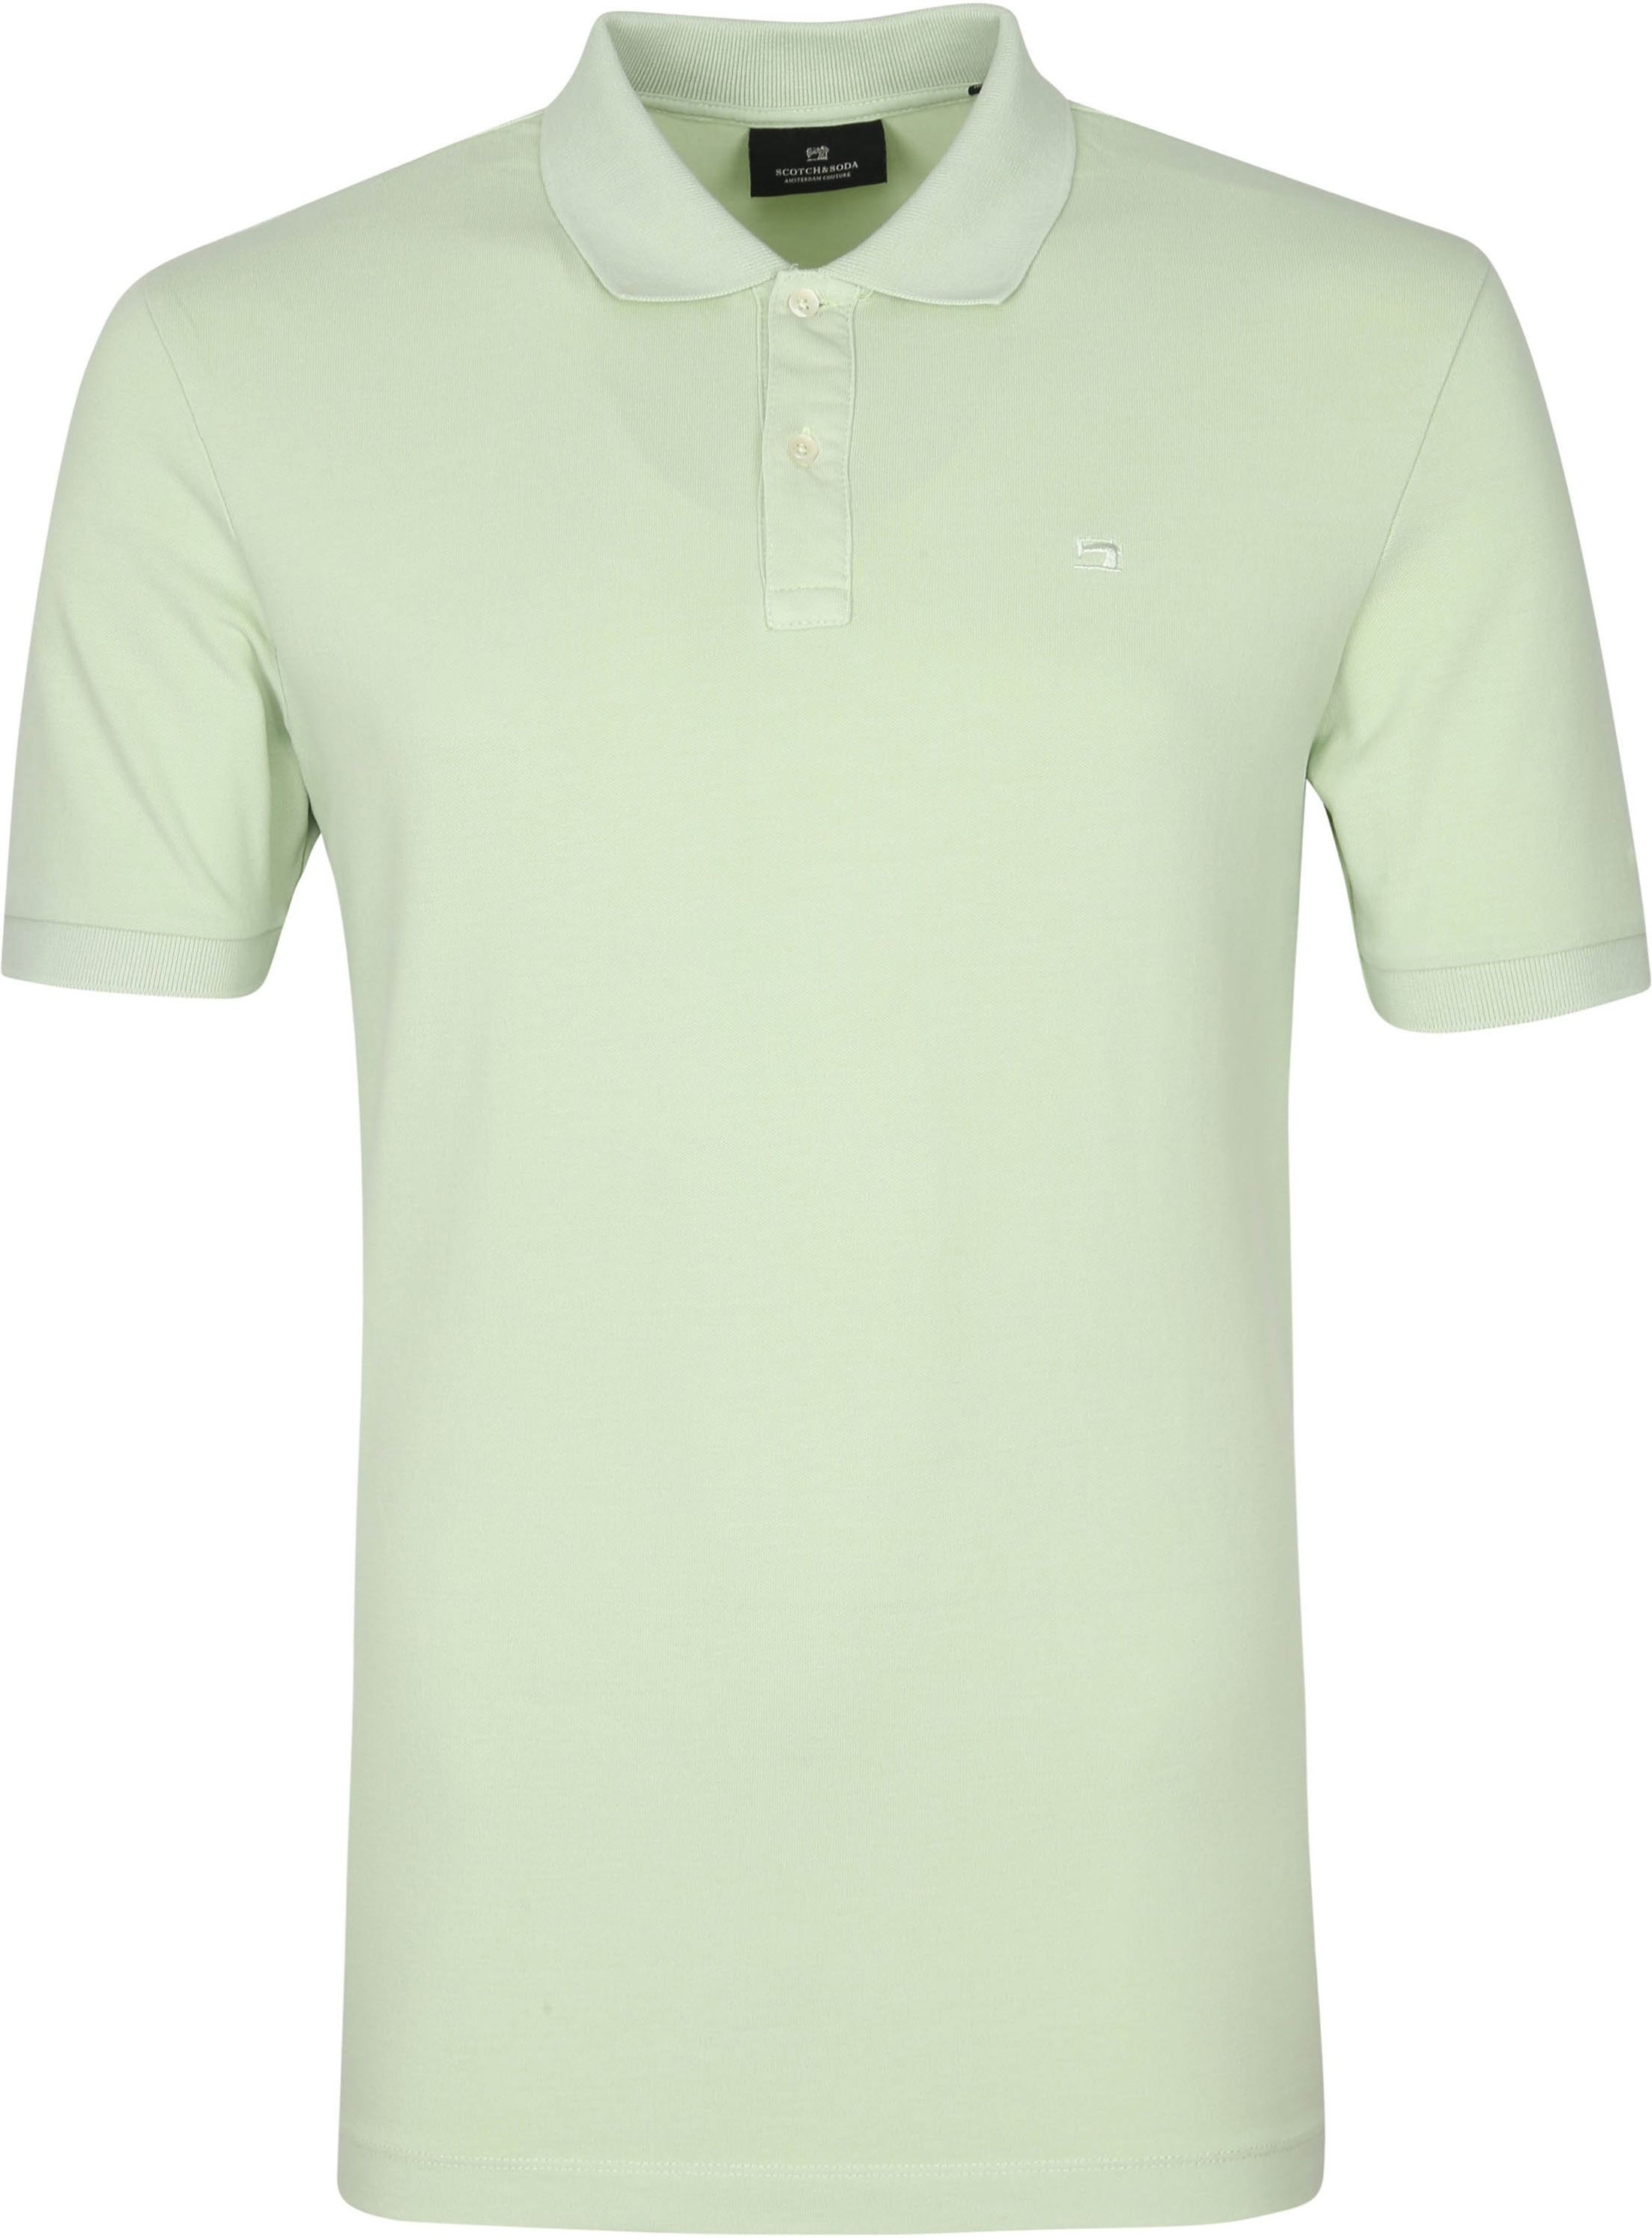 Scotch and Soda Polo Shirt Garment Dye Light Green size XXL